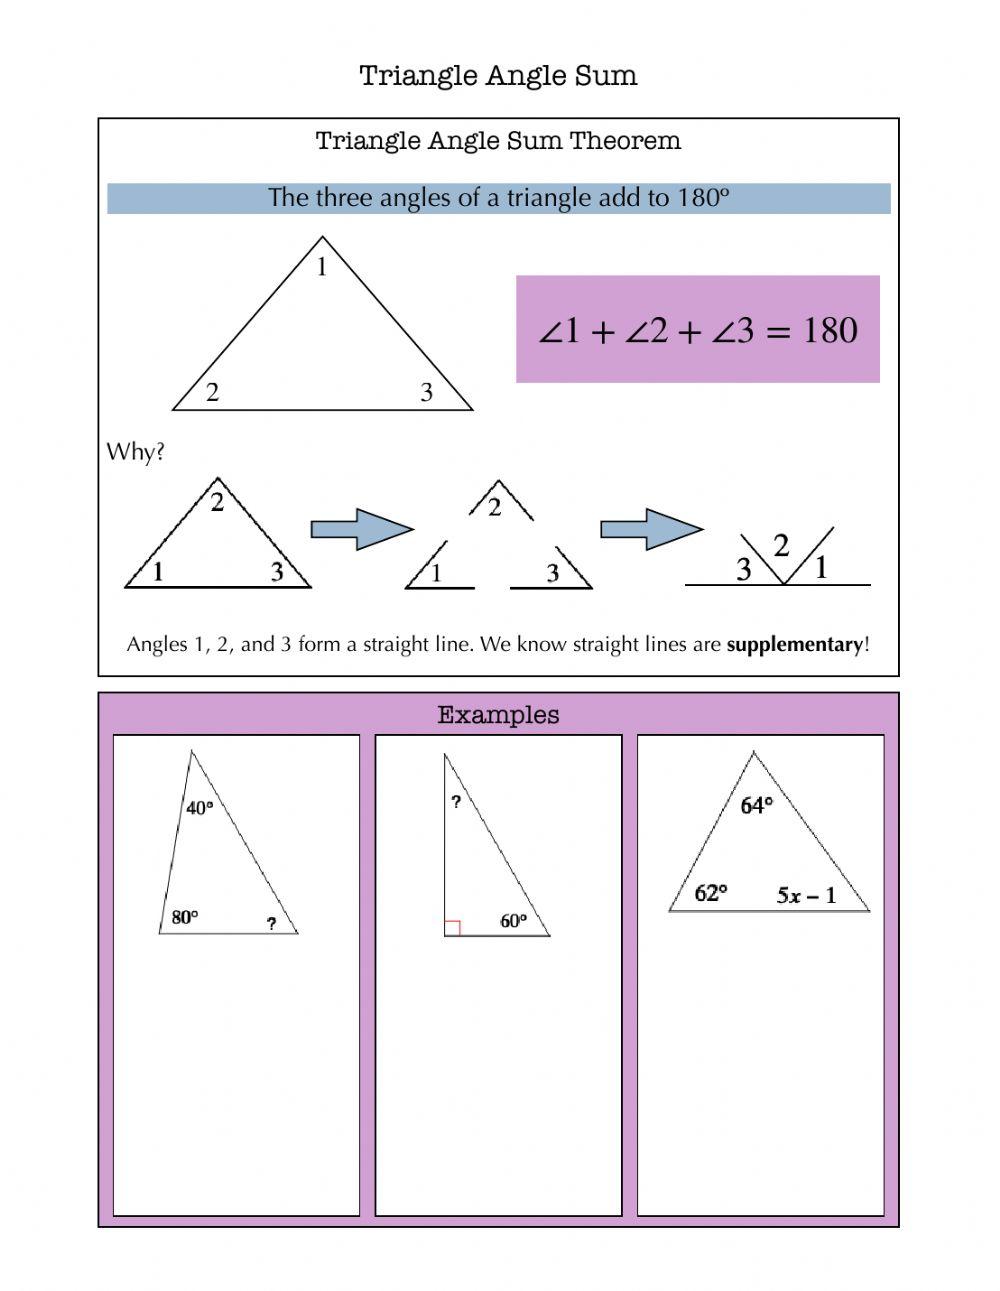 Triangle Angle Sum Notes